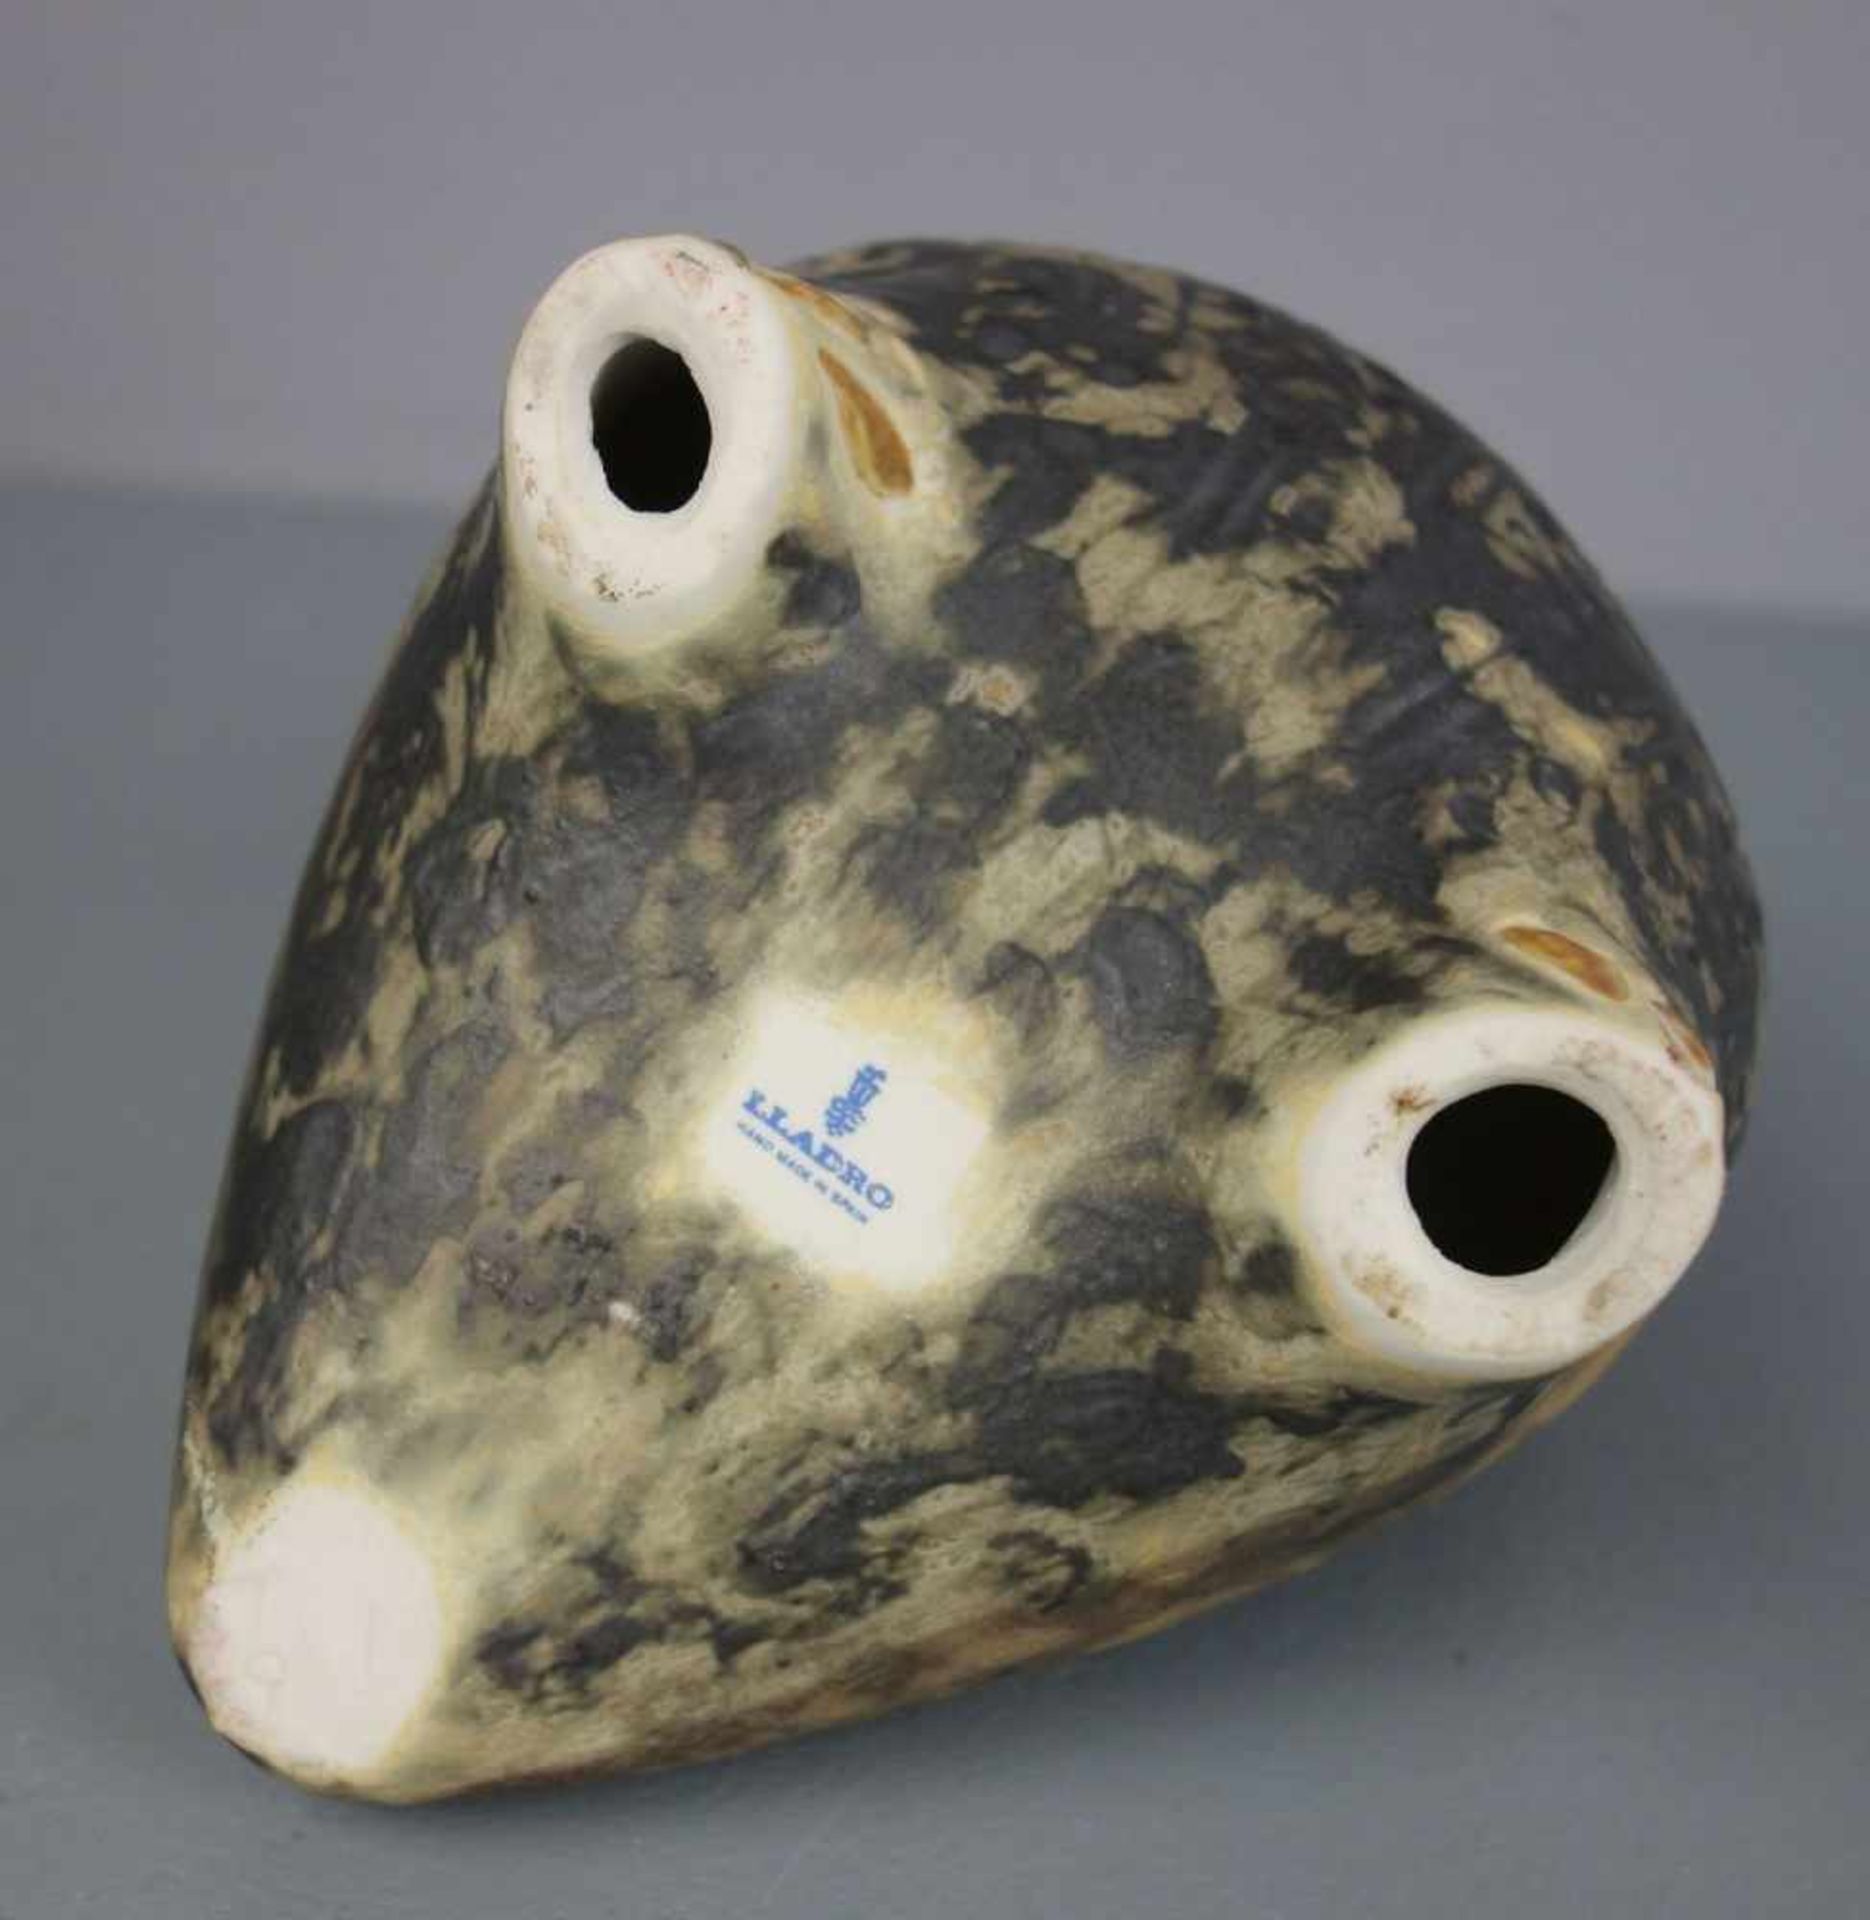 PORZELLANFIGUR "EULE" / porcelain owl, Porzellan, polychrom staffiert, Manufaktur Lladro / - Image 4 of 4